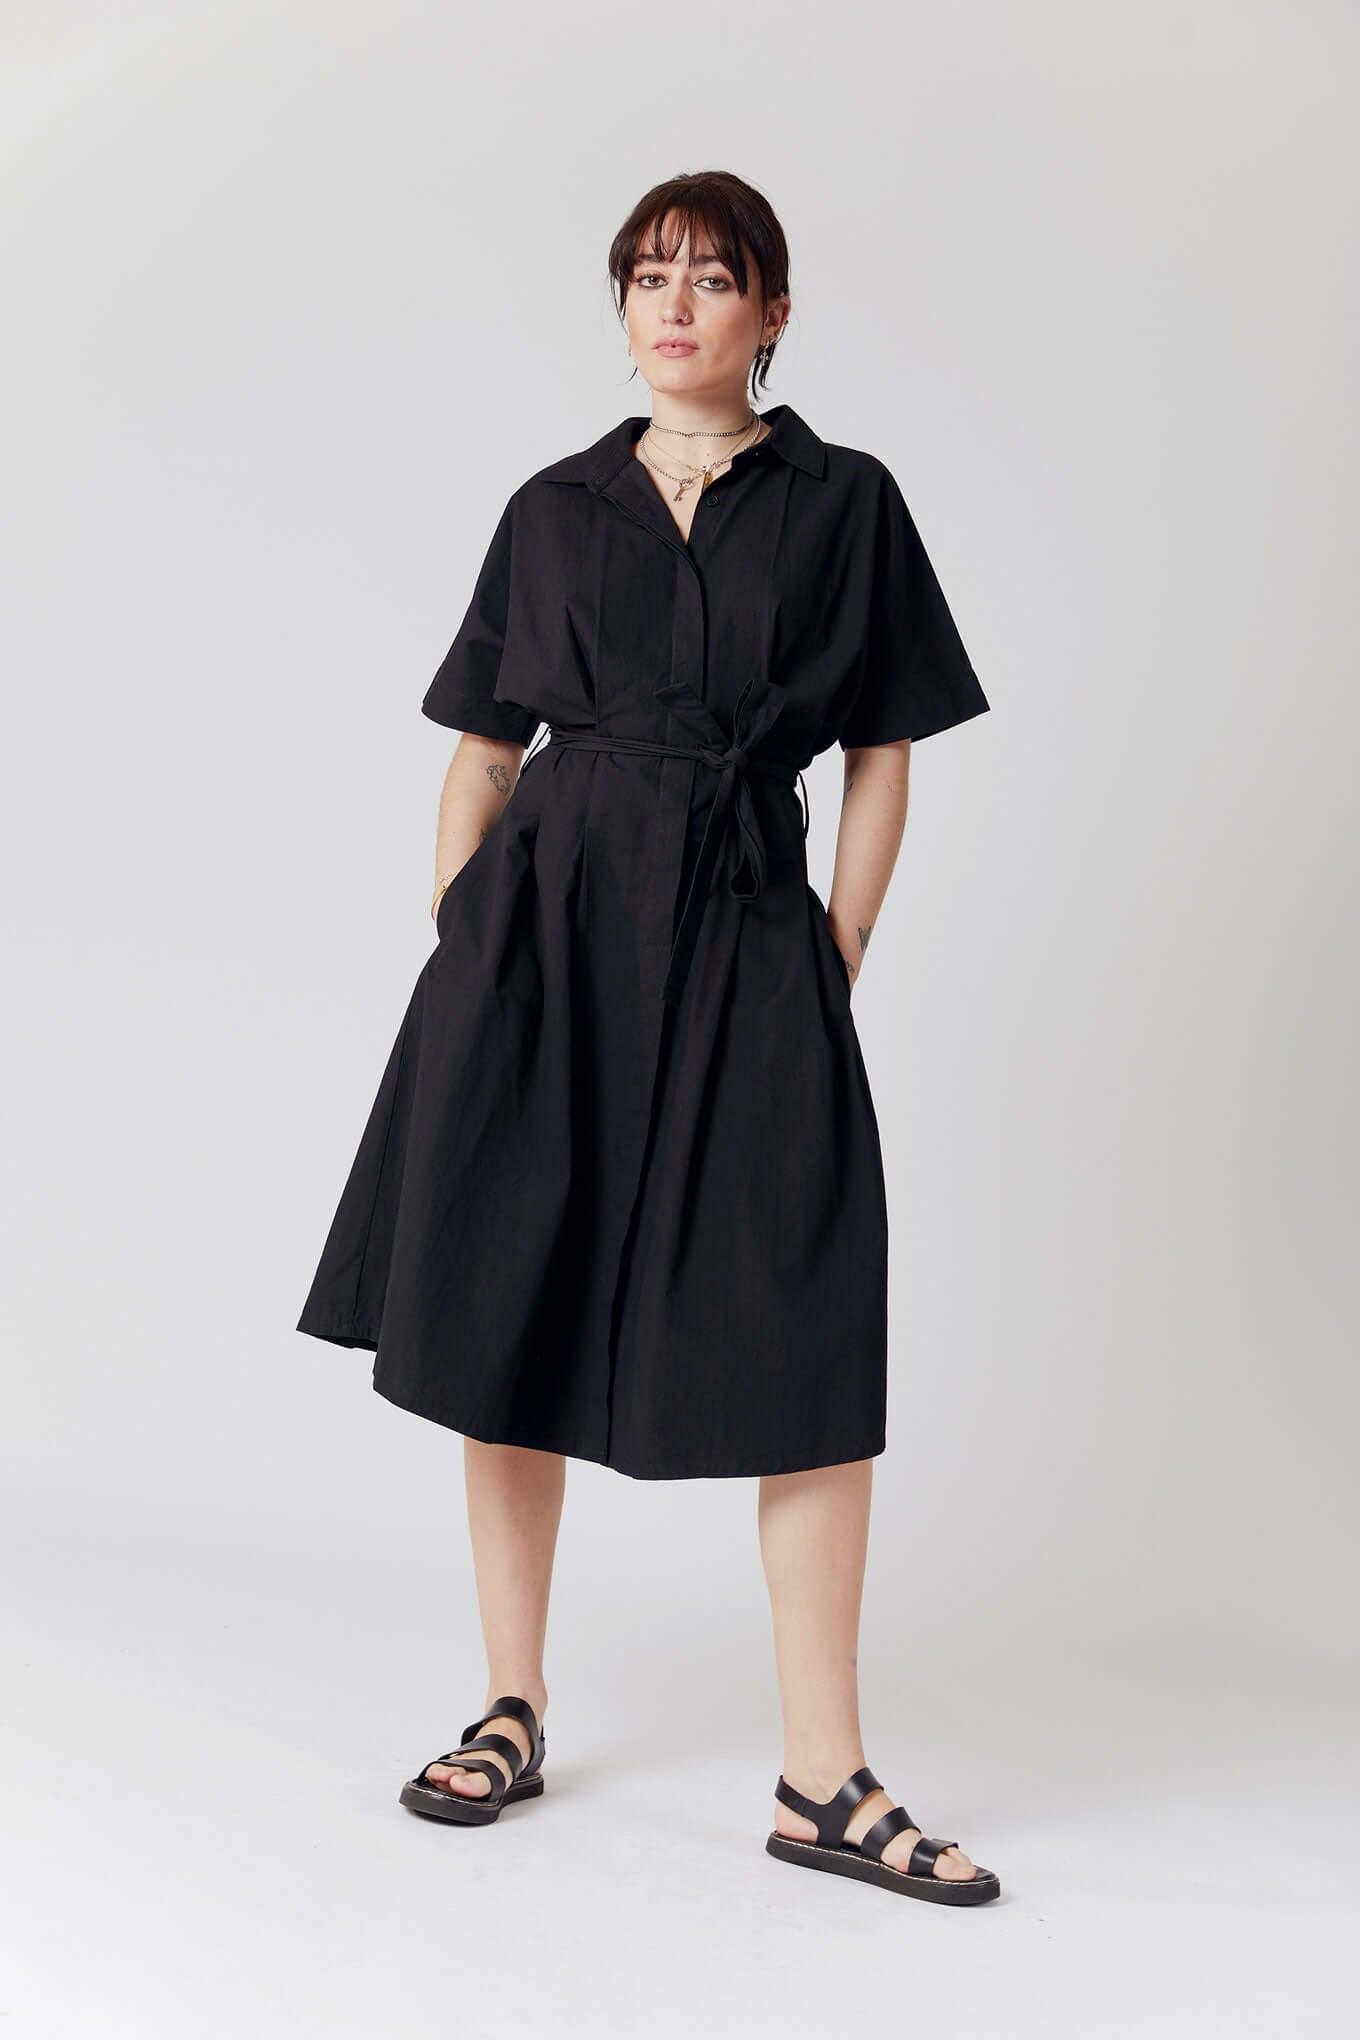 ASHES Organic Cotton Dress Black, SIZE 1 / UK 8 / EUR 36